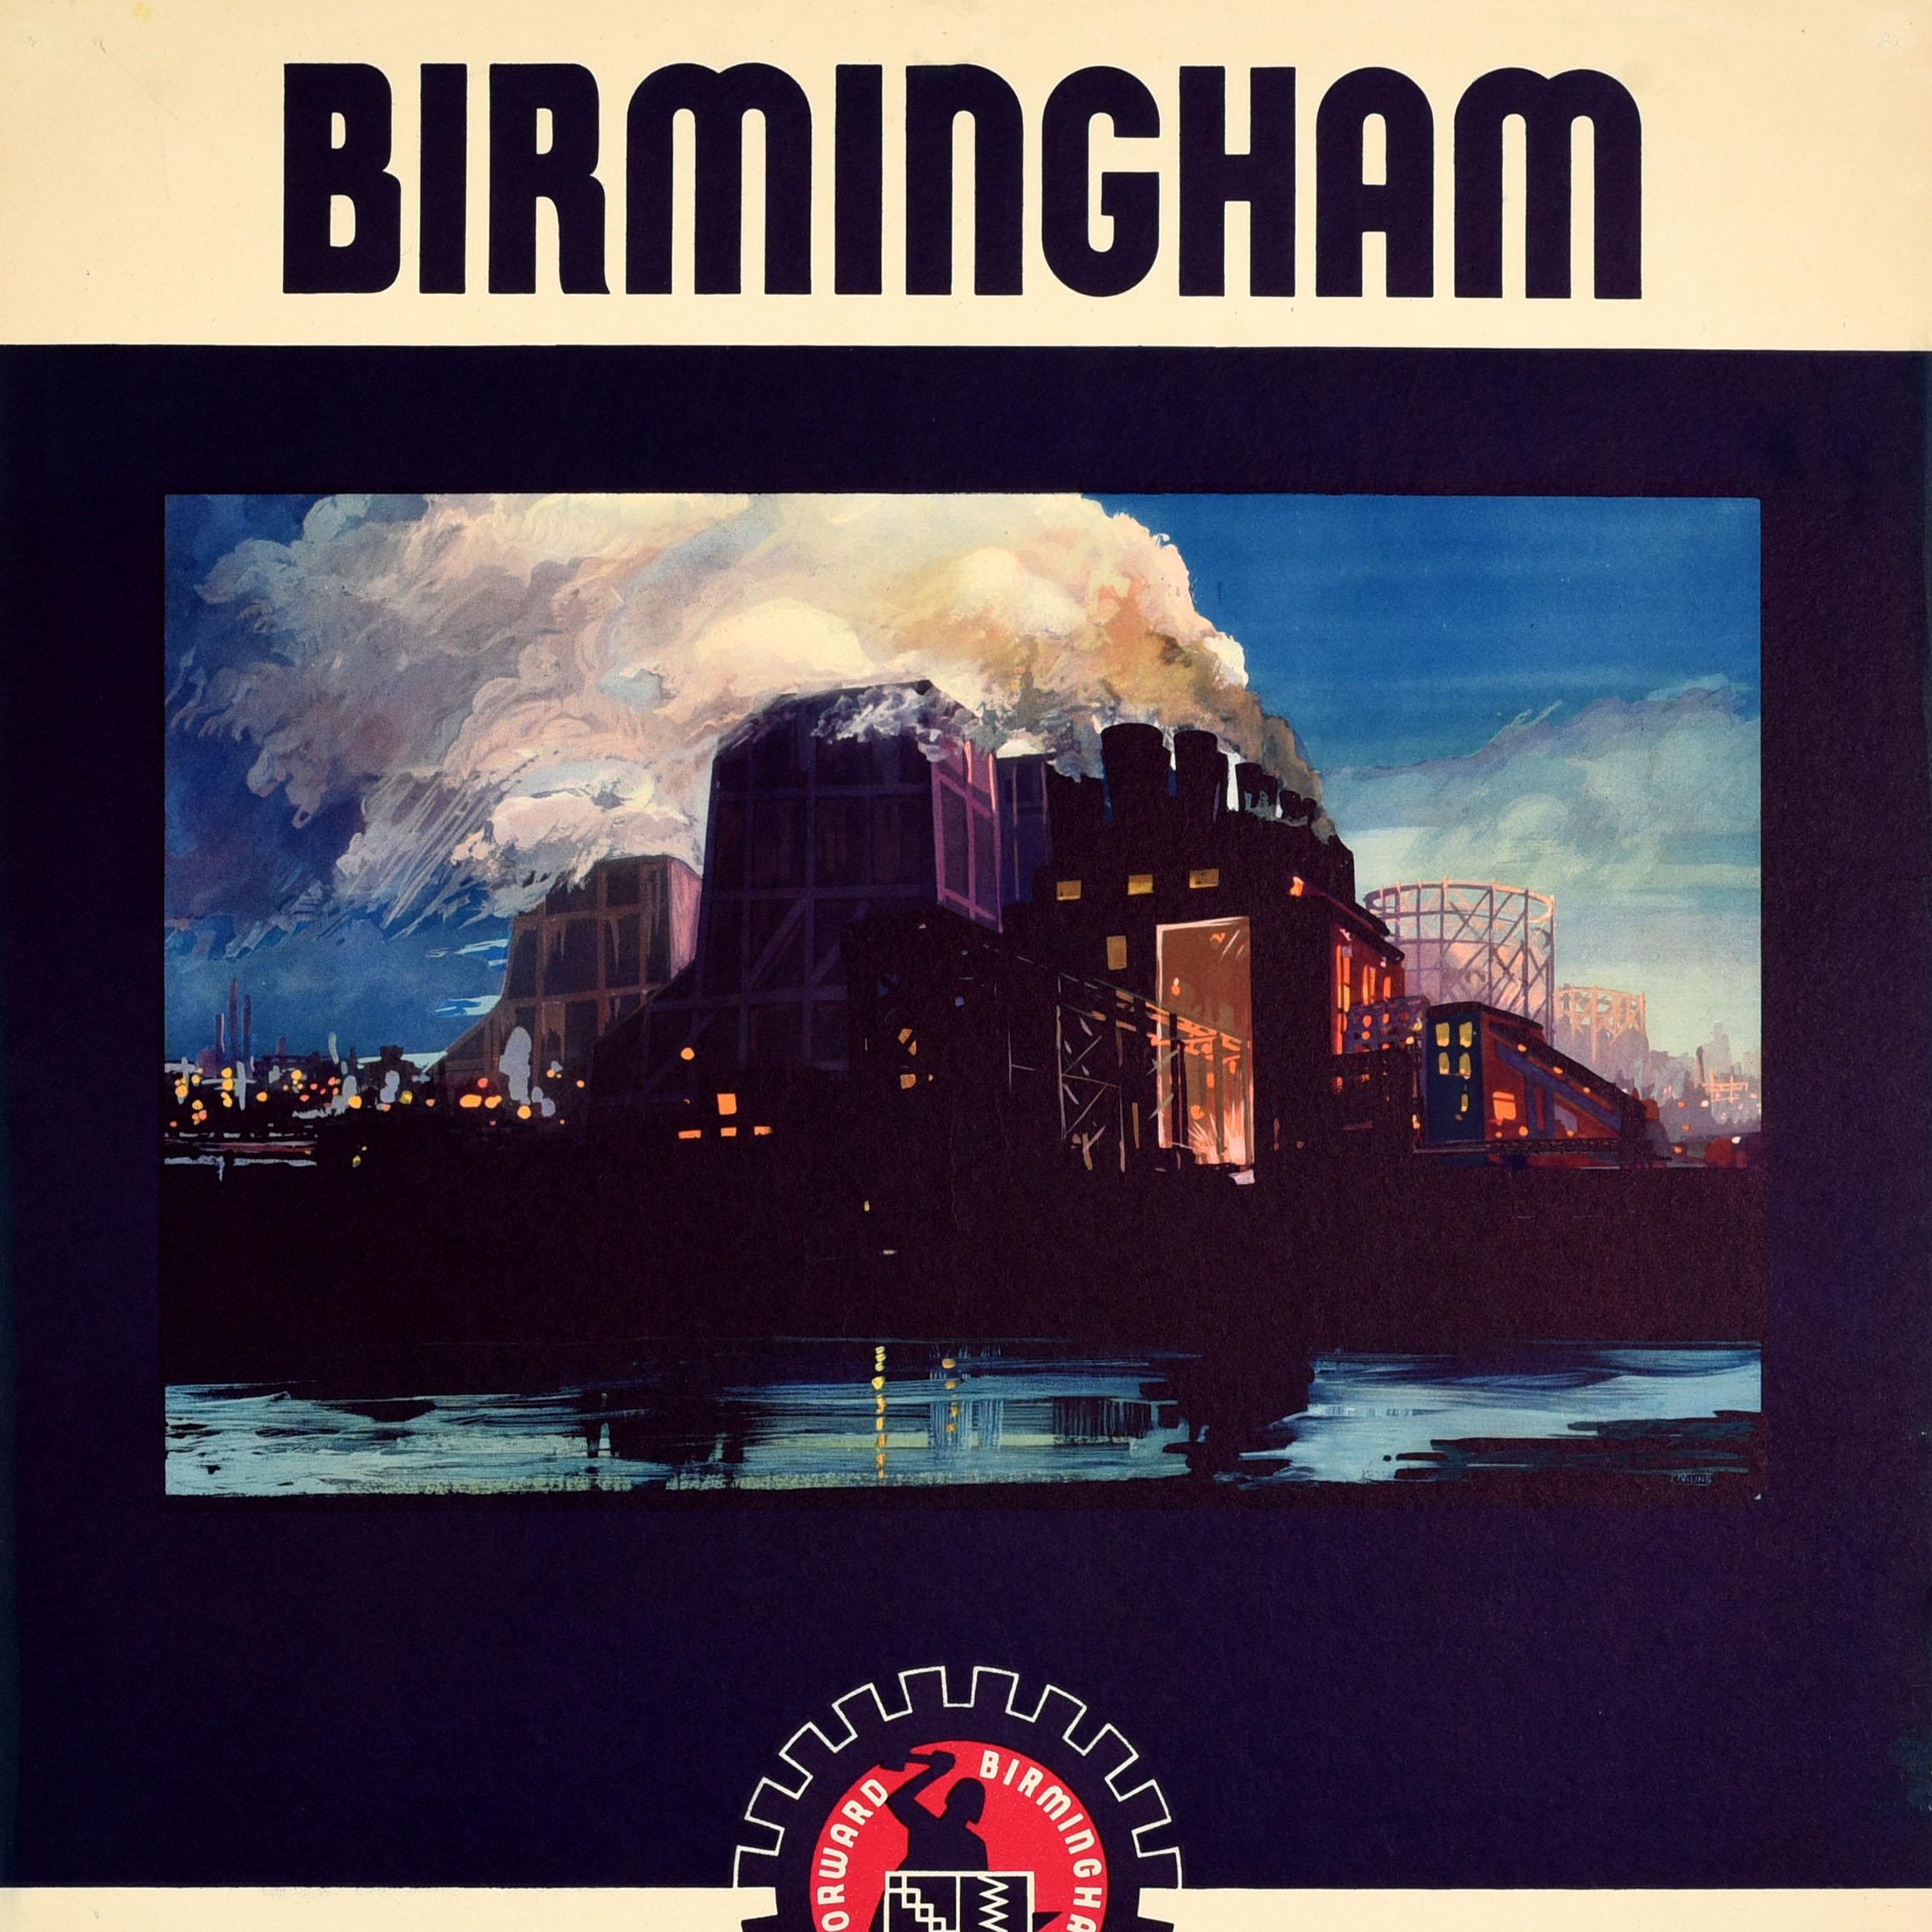 Original Vintage Travel Poster Birmingham England Second City Art Deco Industry - Black Print by Unknown